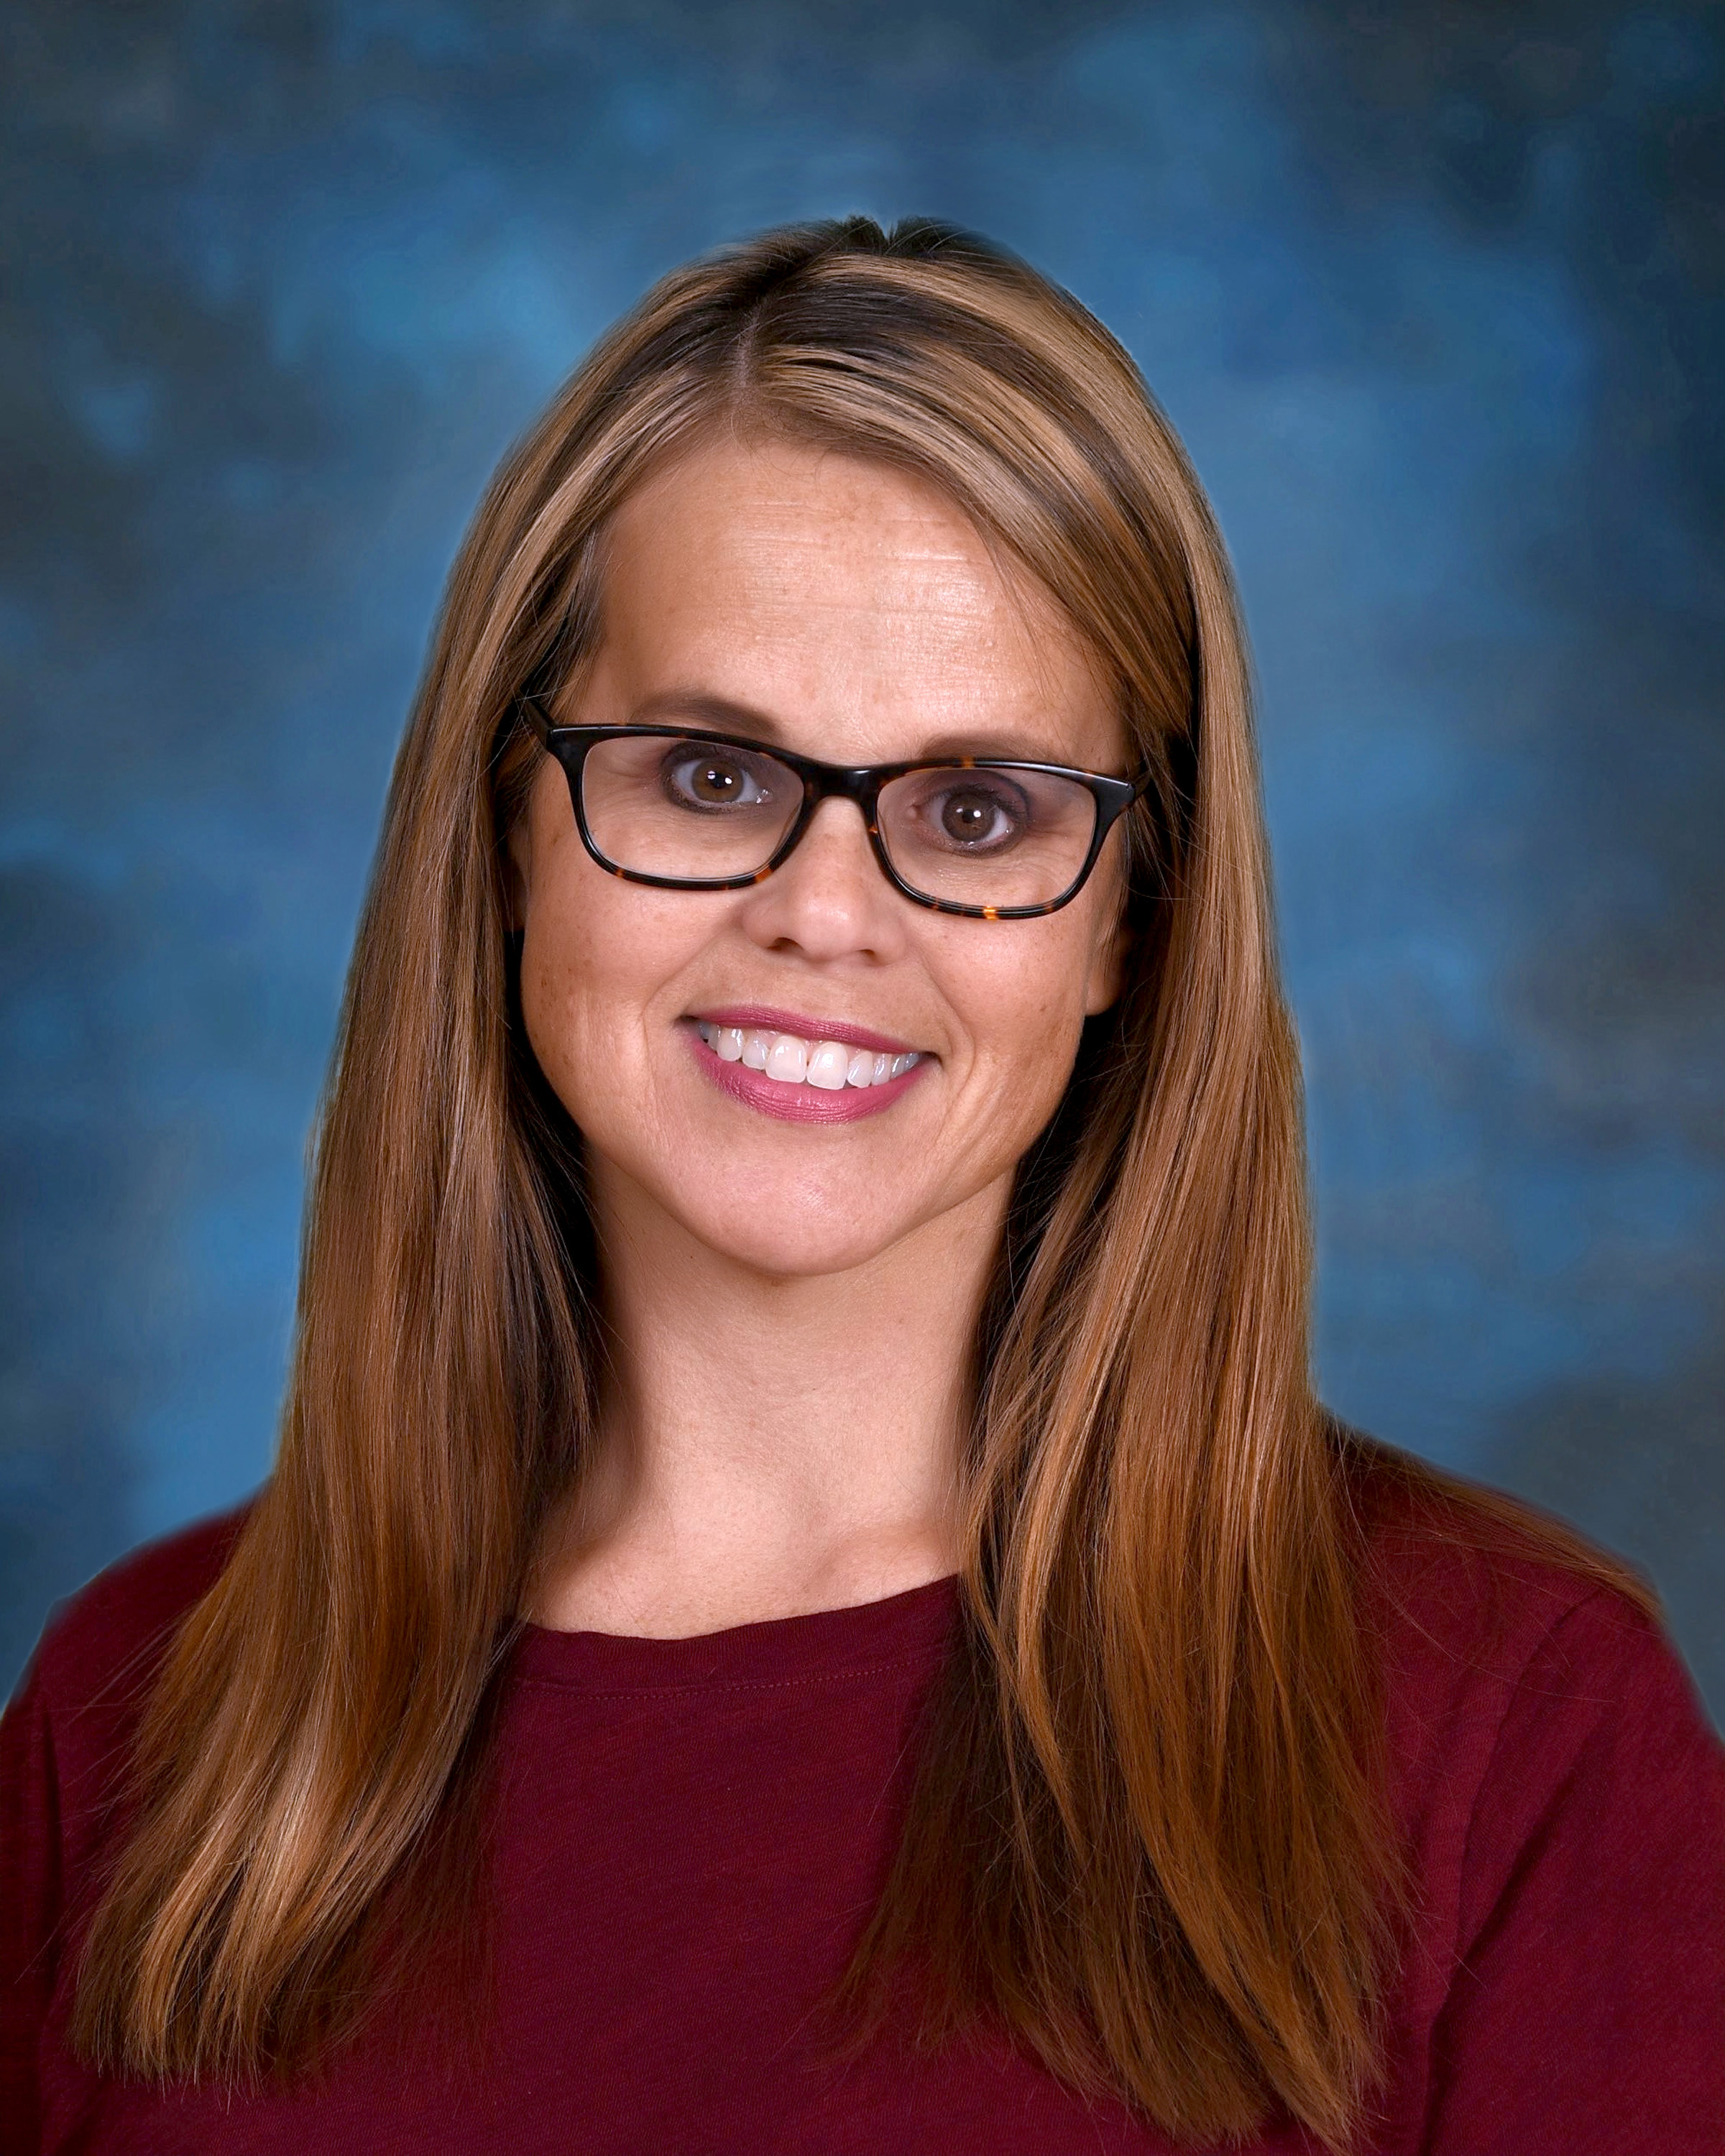 Stacie Anderson - Principal of Lynn Haven Elementary School in Florida